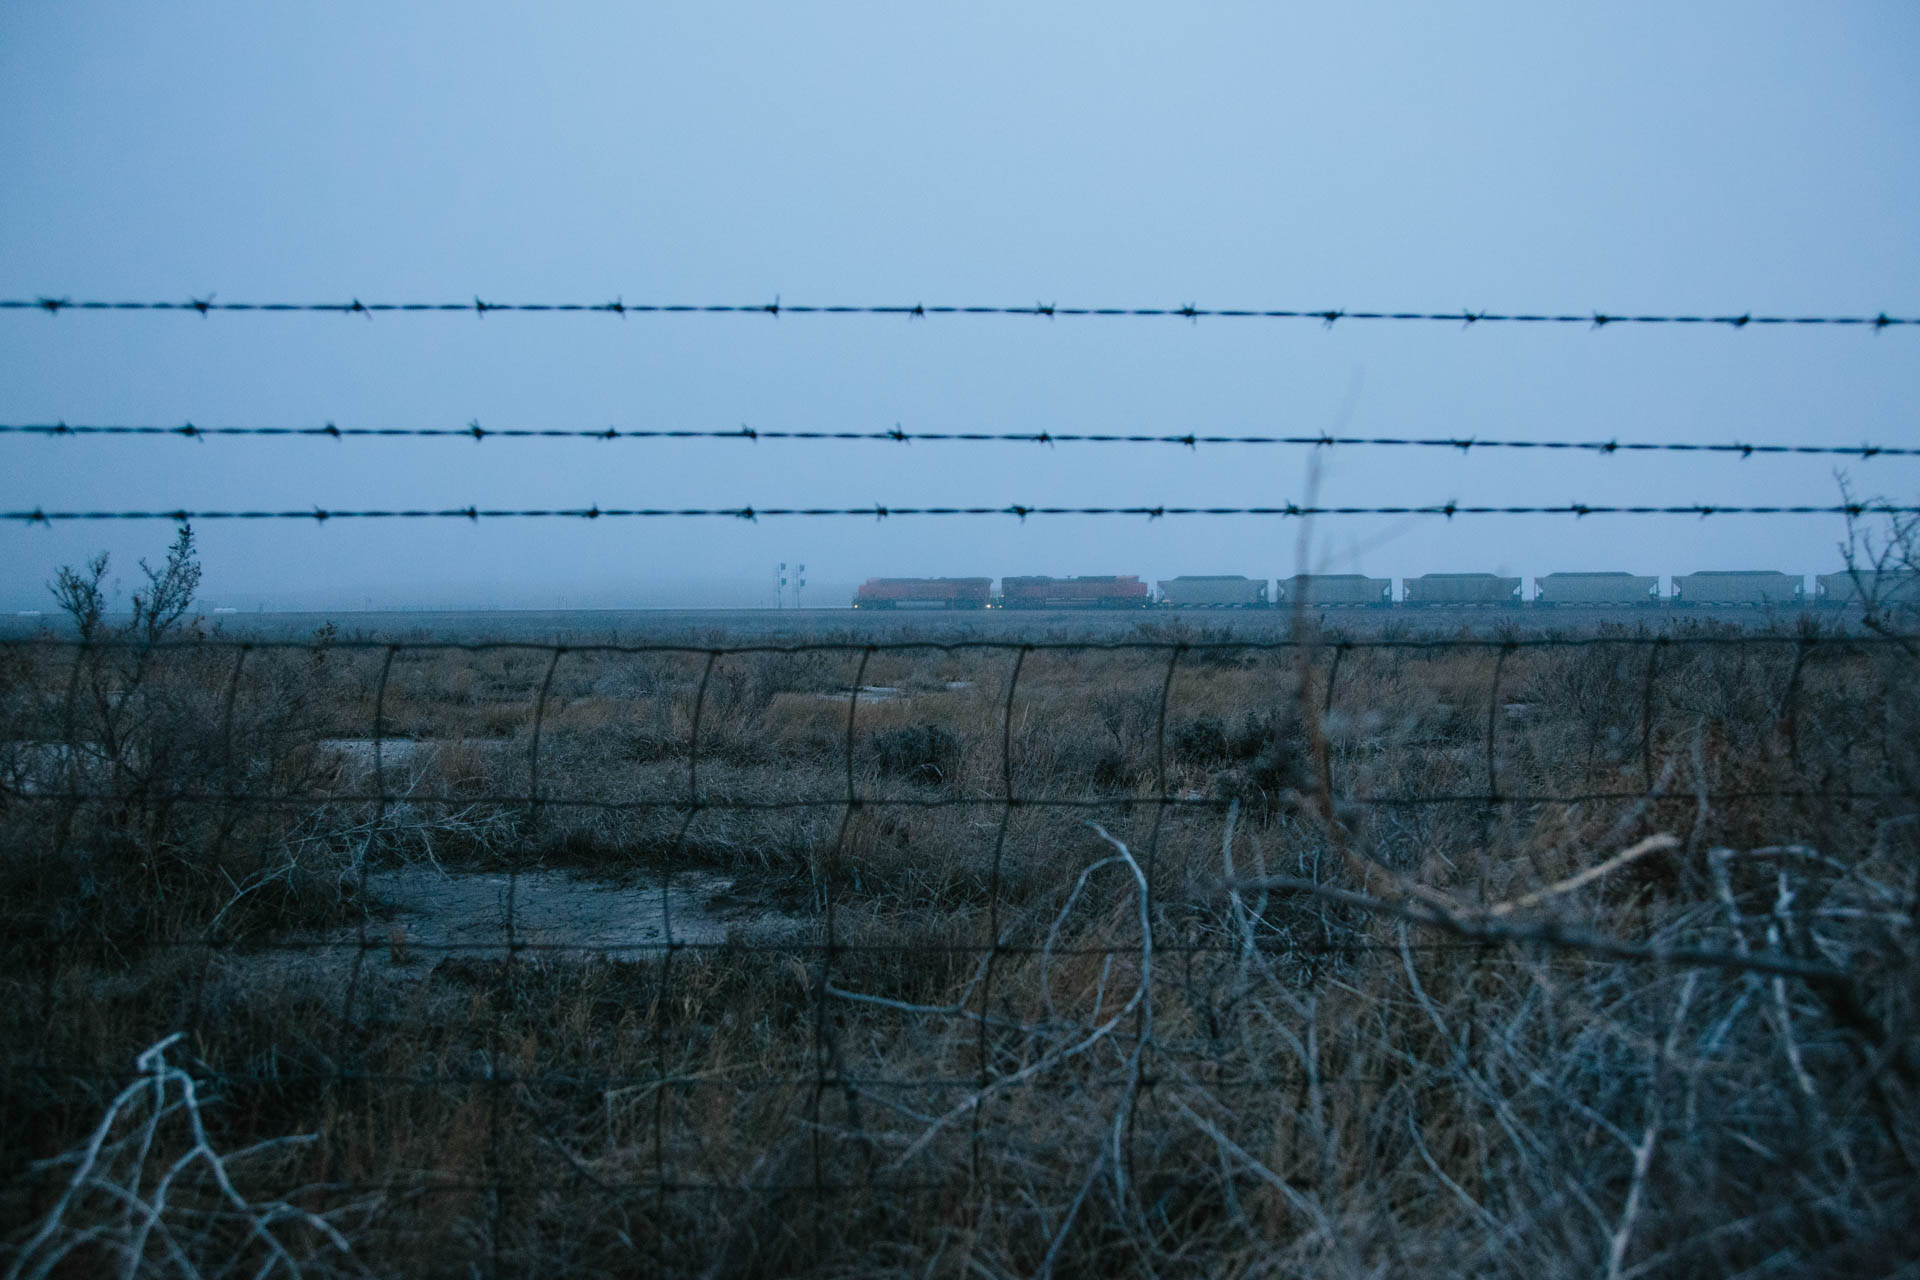 barb-wire-fence-coal-train-dawn-national-grasslands-wright-wy-6383